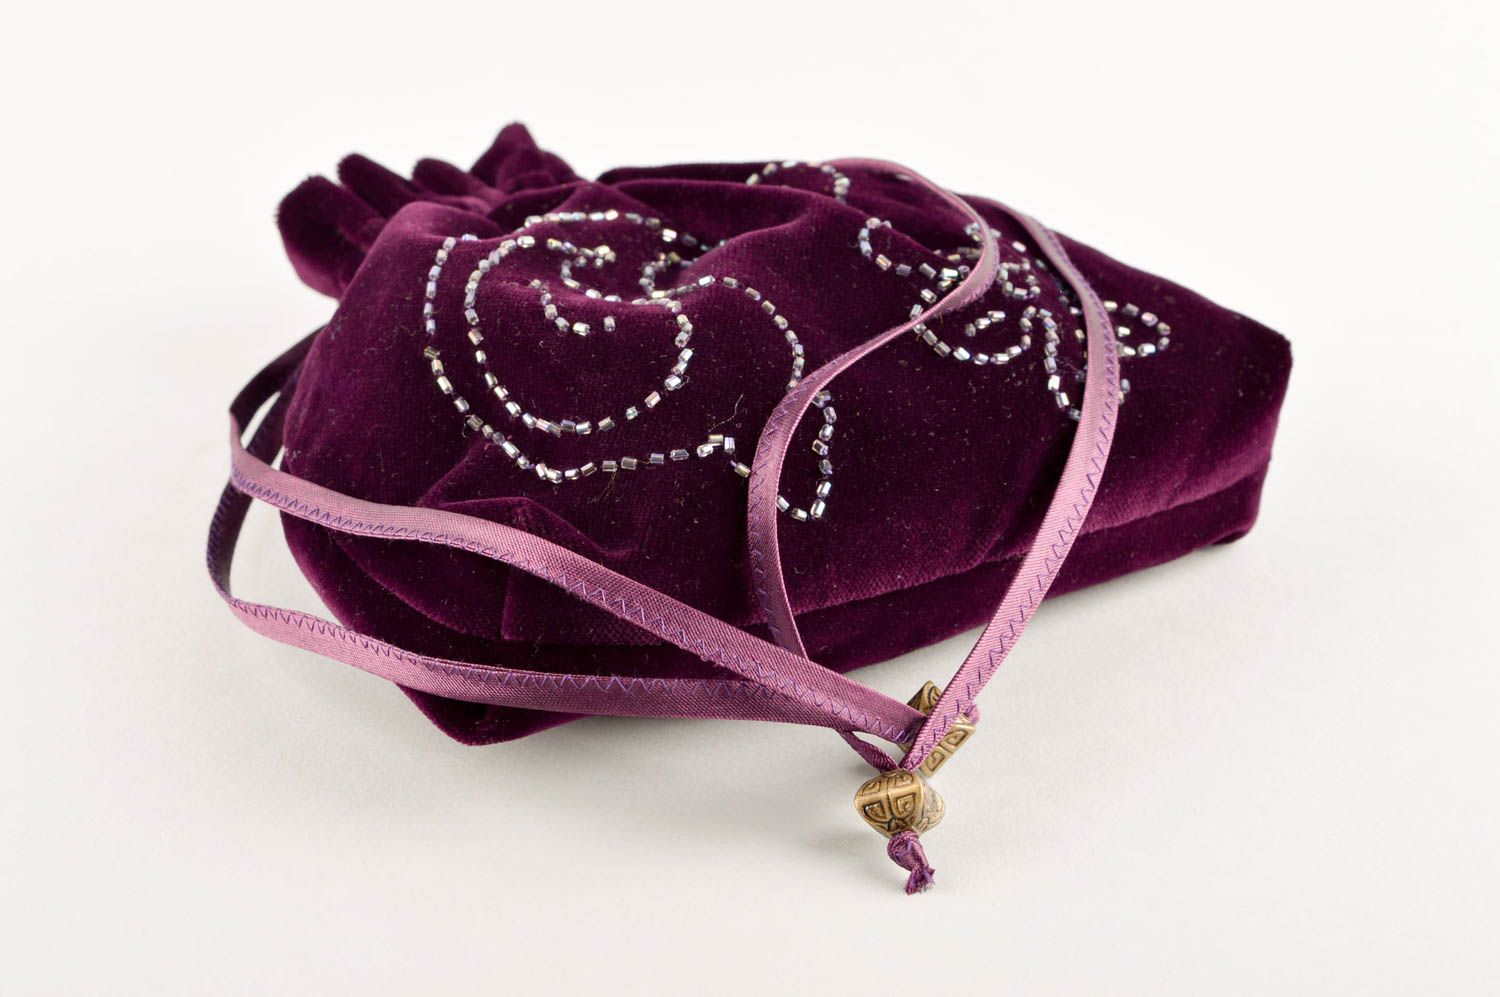 Beautiful handmade fabric purse amazing designs fashion accessories gift ideas photo 4